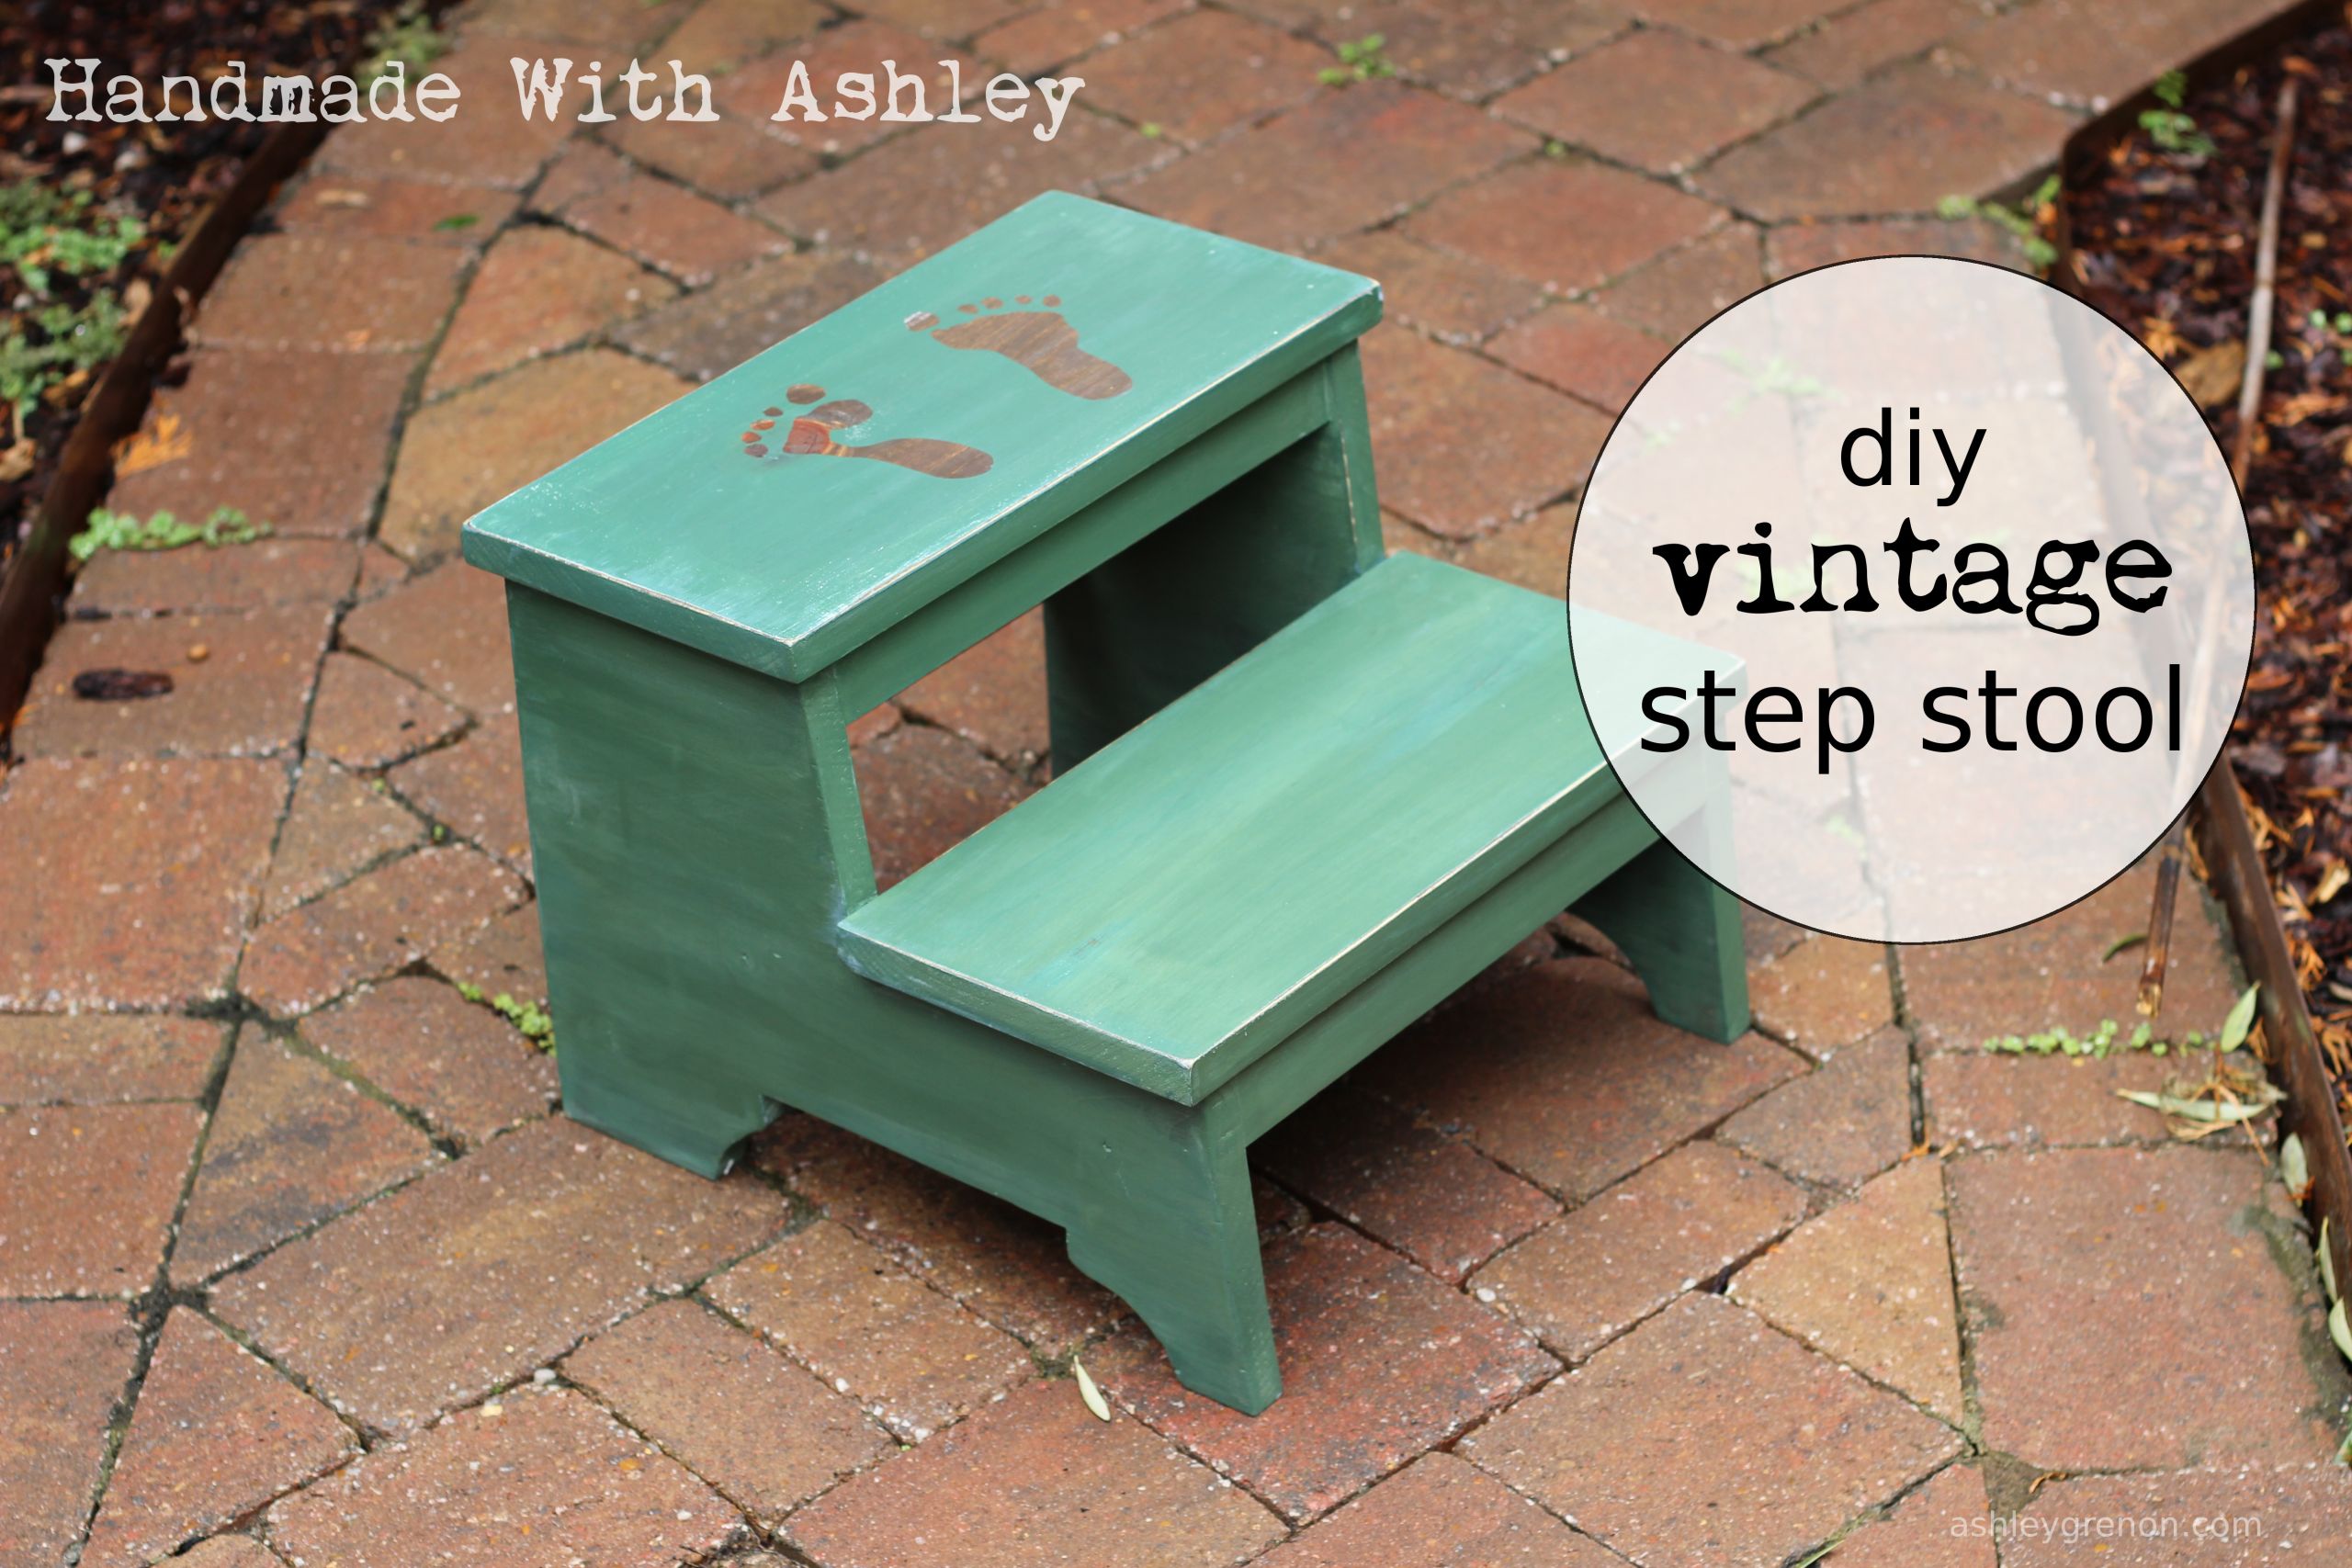 DIY Stool Plans
 DIY Vintage Step Stool Plans by Ana White Handmade